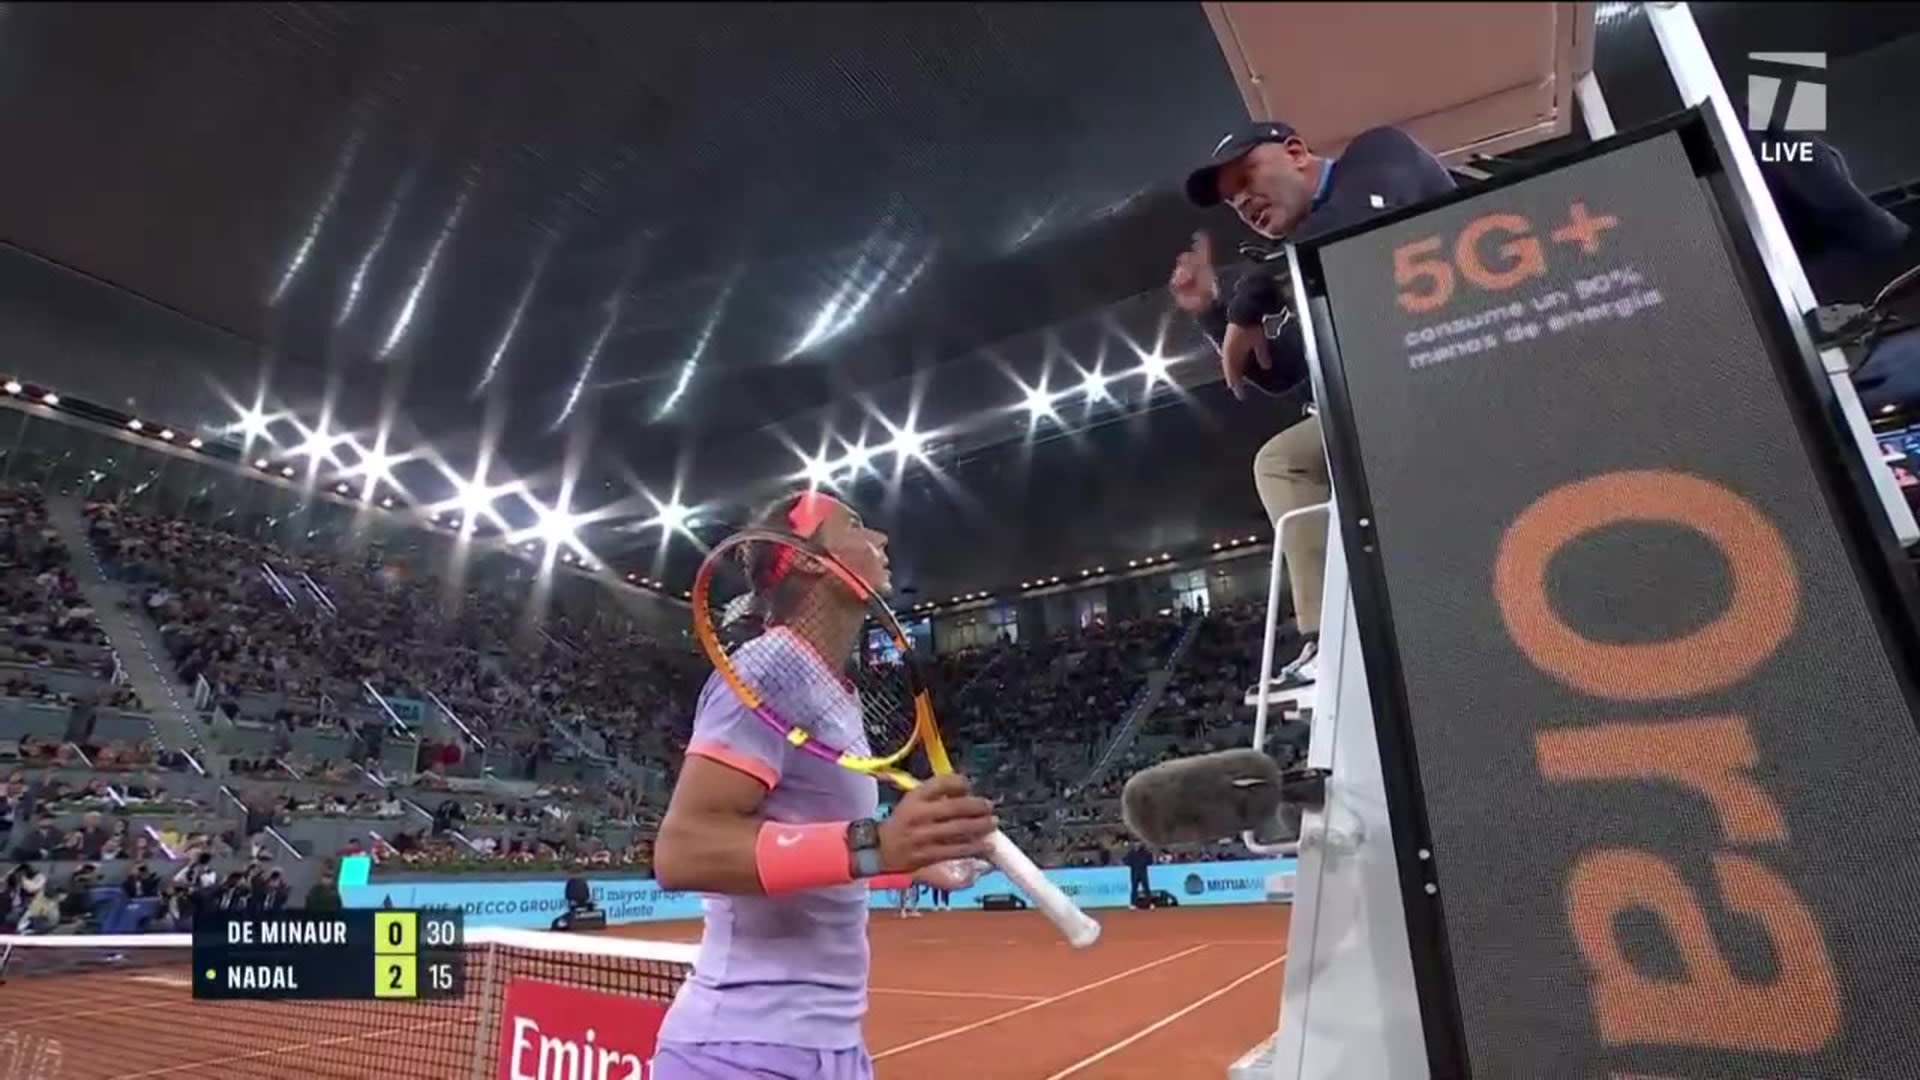 Rafael Nadal denied opportunity to challenge Alex de Minaur's shot by Fergus Murphy in Madrid | Tennis.com